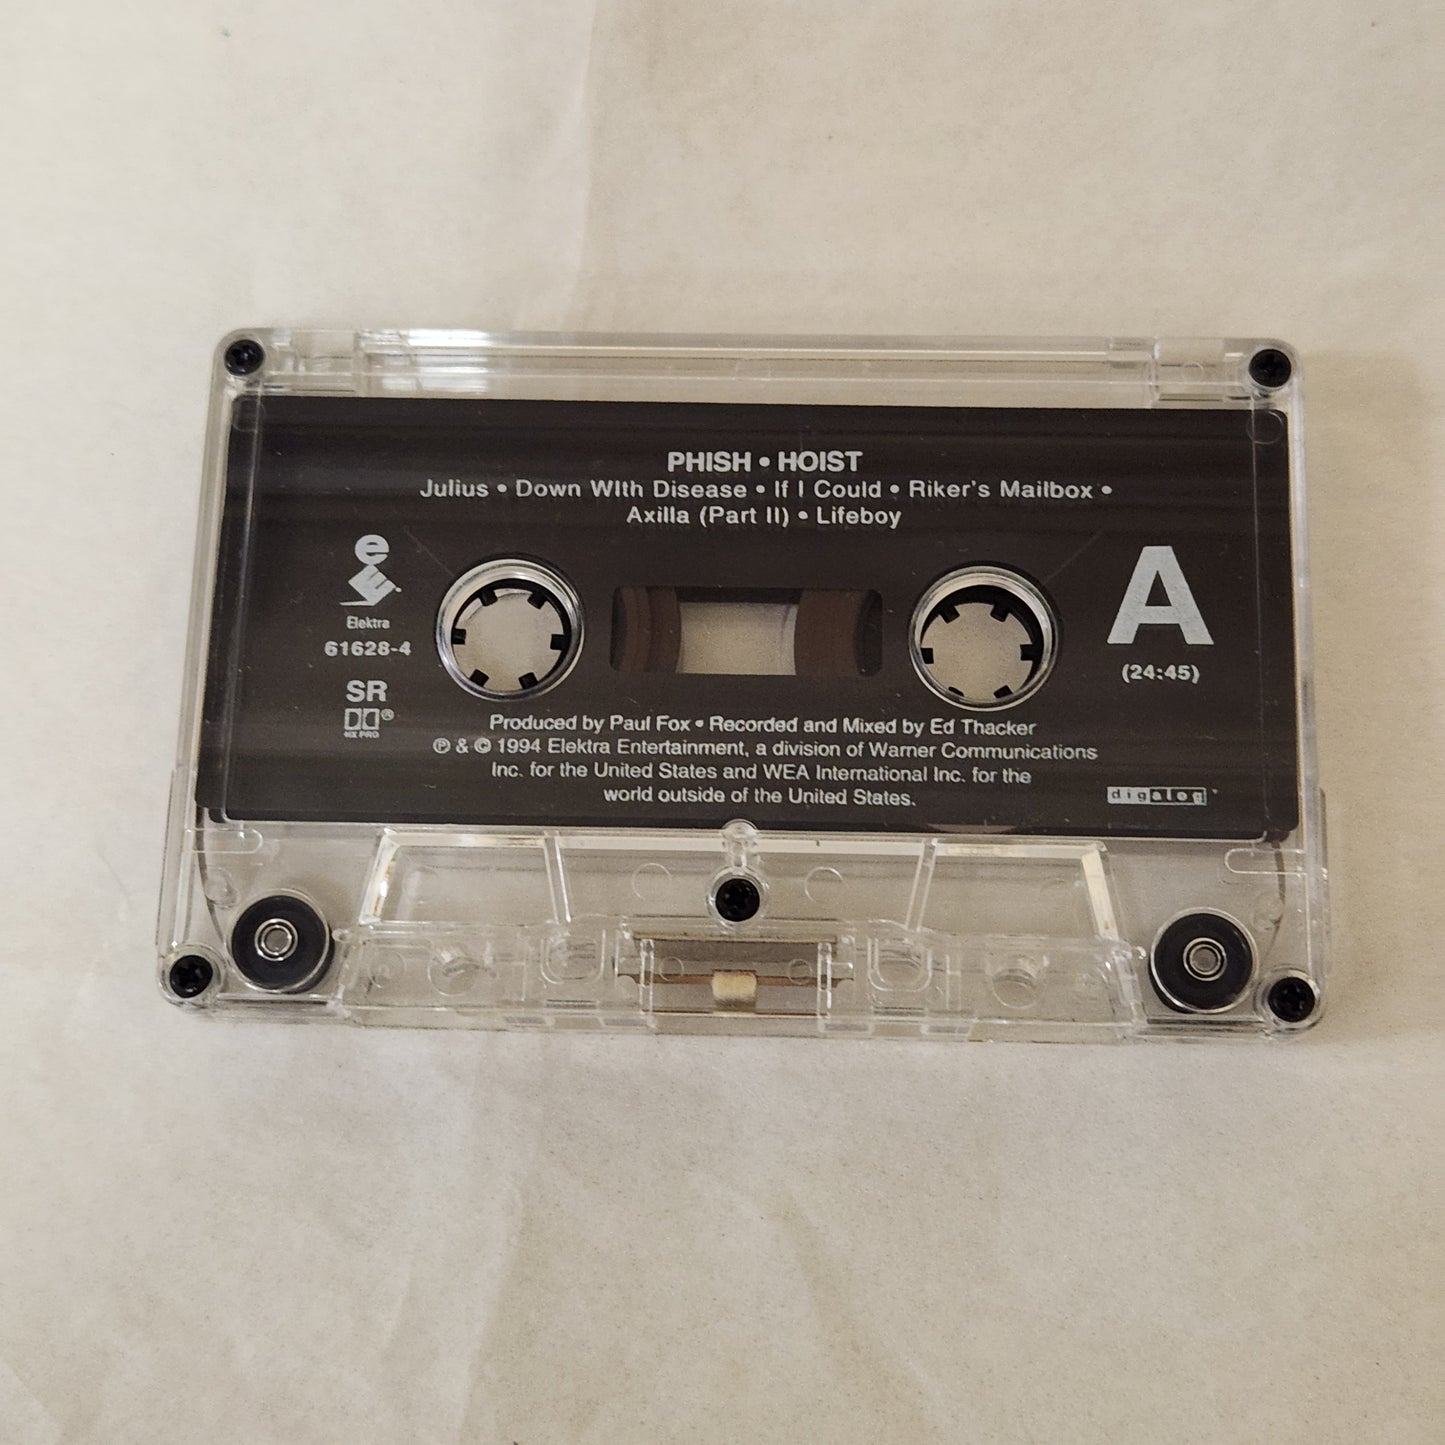 Phish "Hoist" 1994 Psychedelic Rock / Alternative Rock Cassette Tape